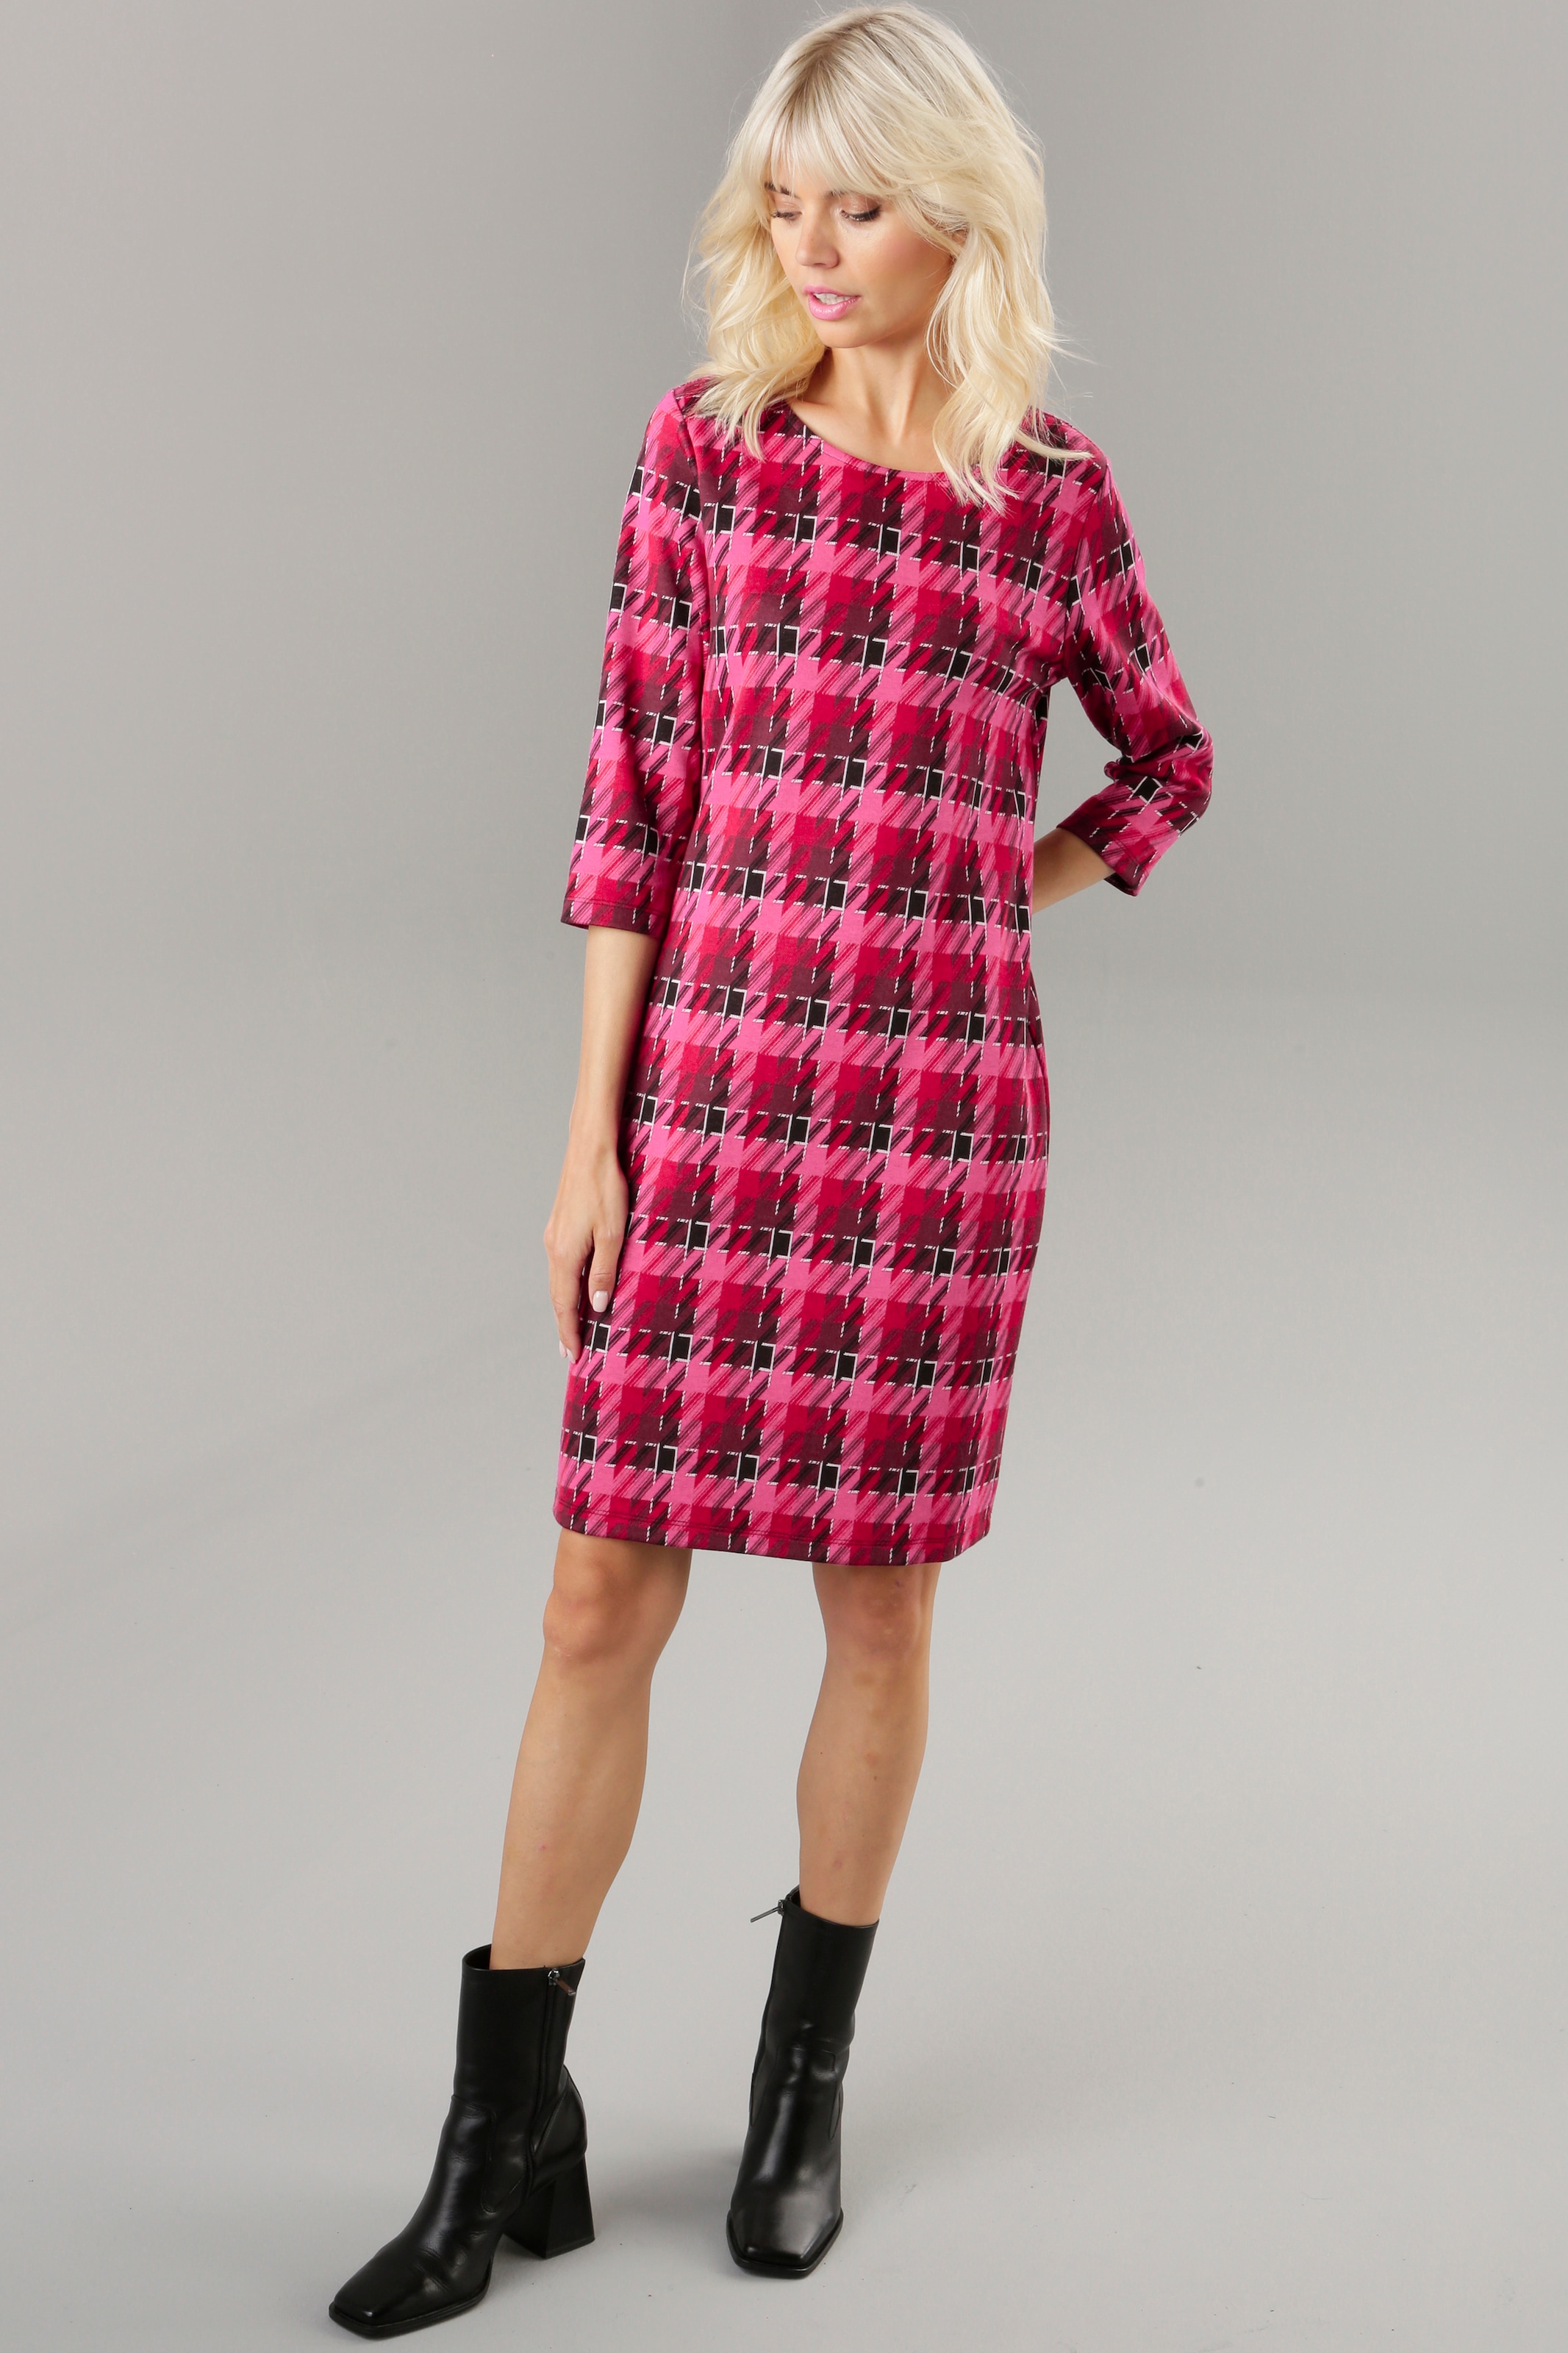 Shop Online Jelmoli-Versand Jerseykleid, in trendy mit | SELECTED Knallfarben Allover-Muster Aniston